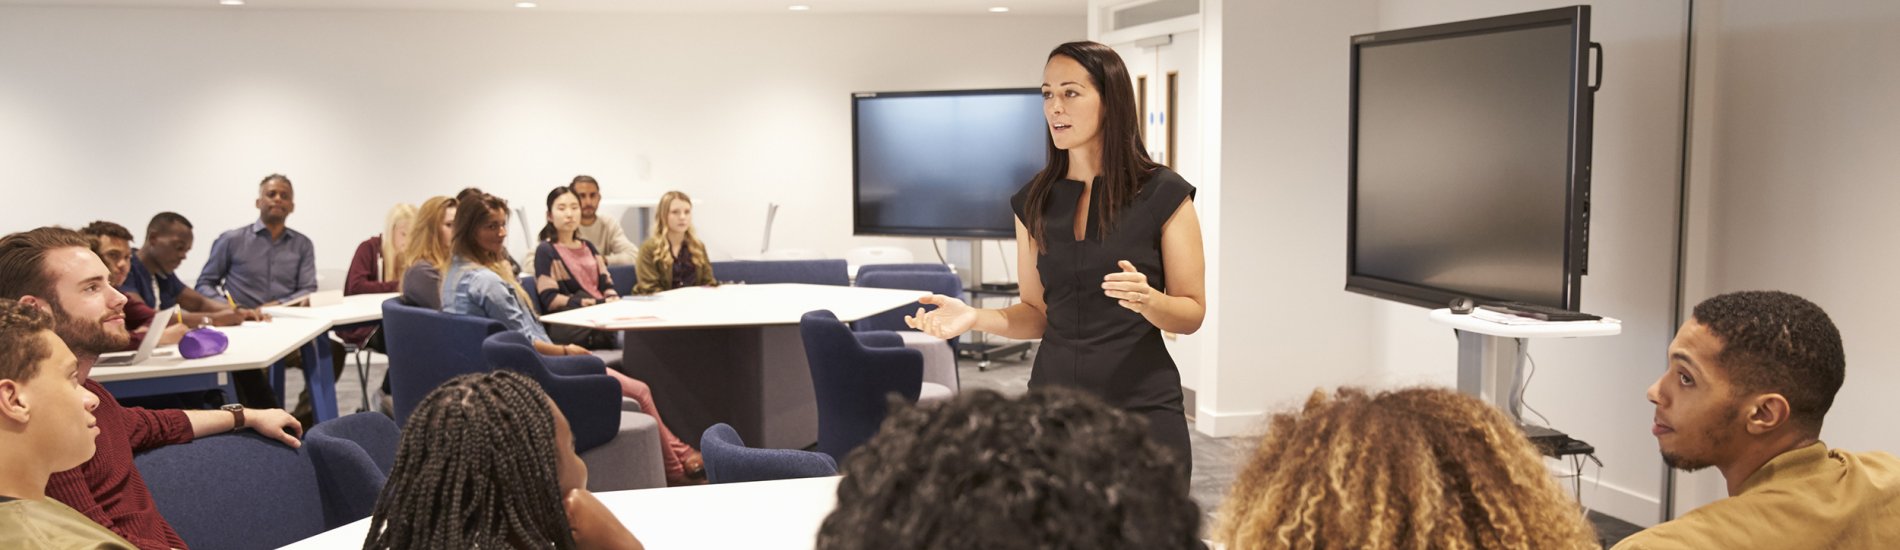 Female teacher addressing university students in a classroom. 